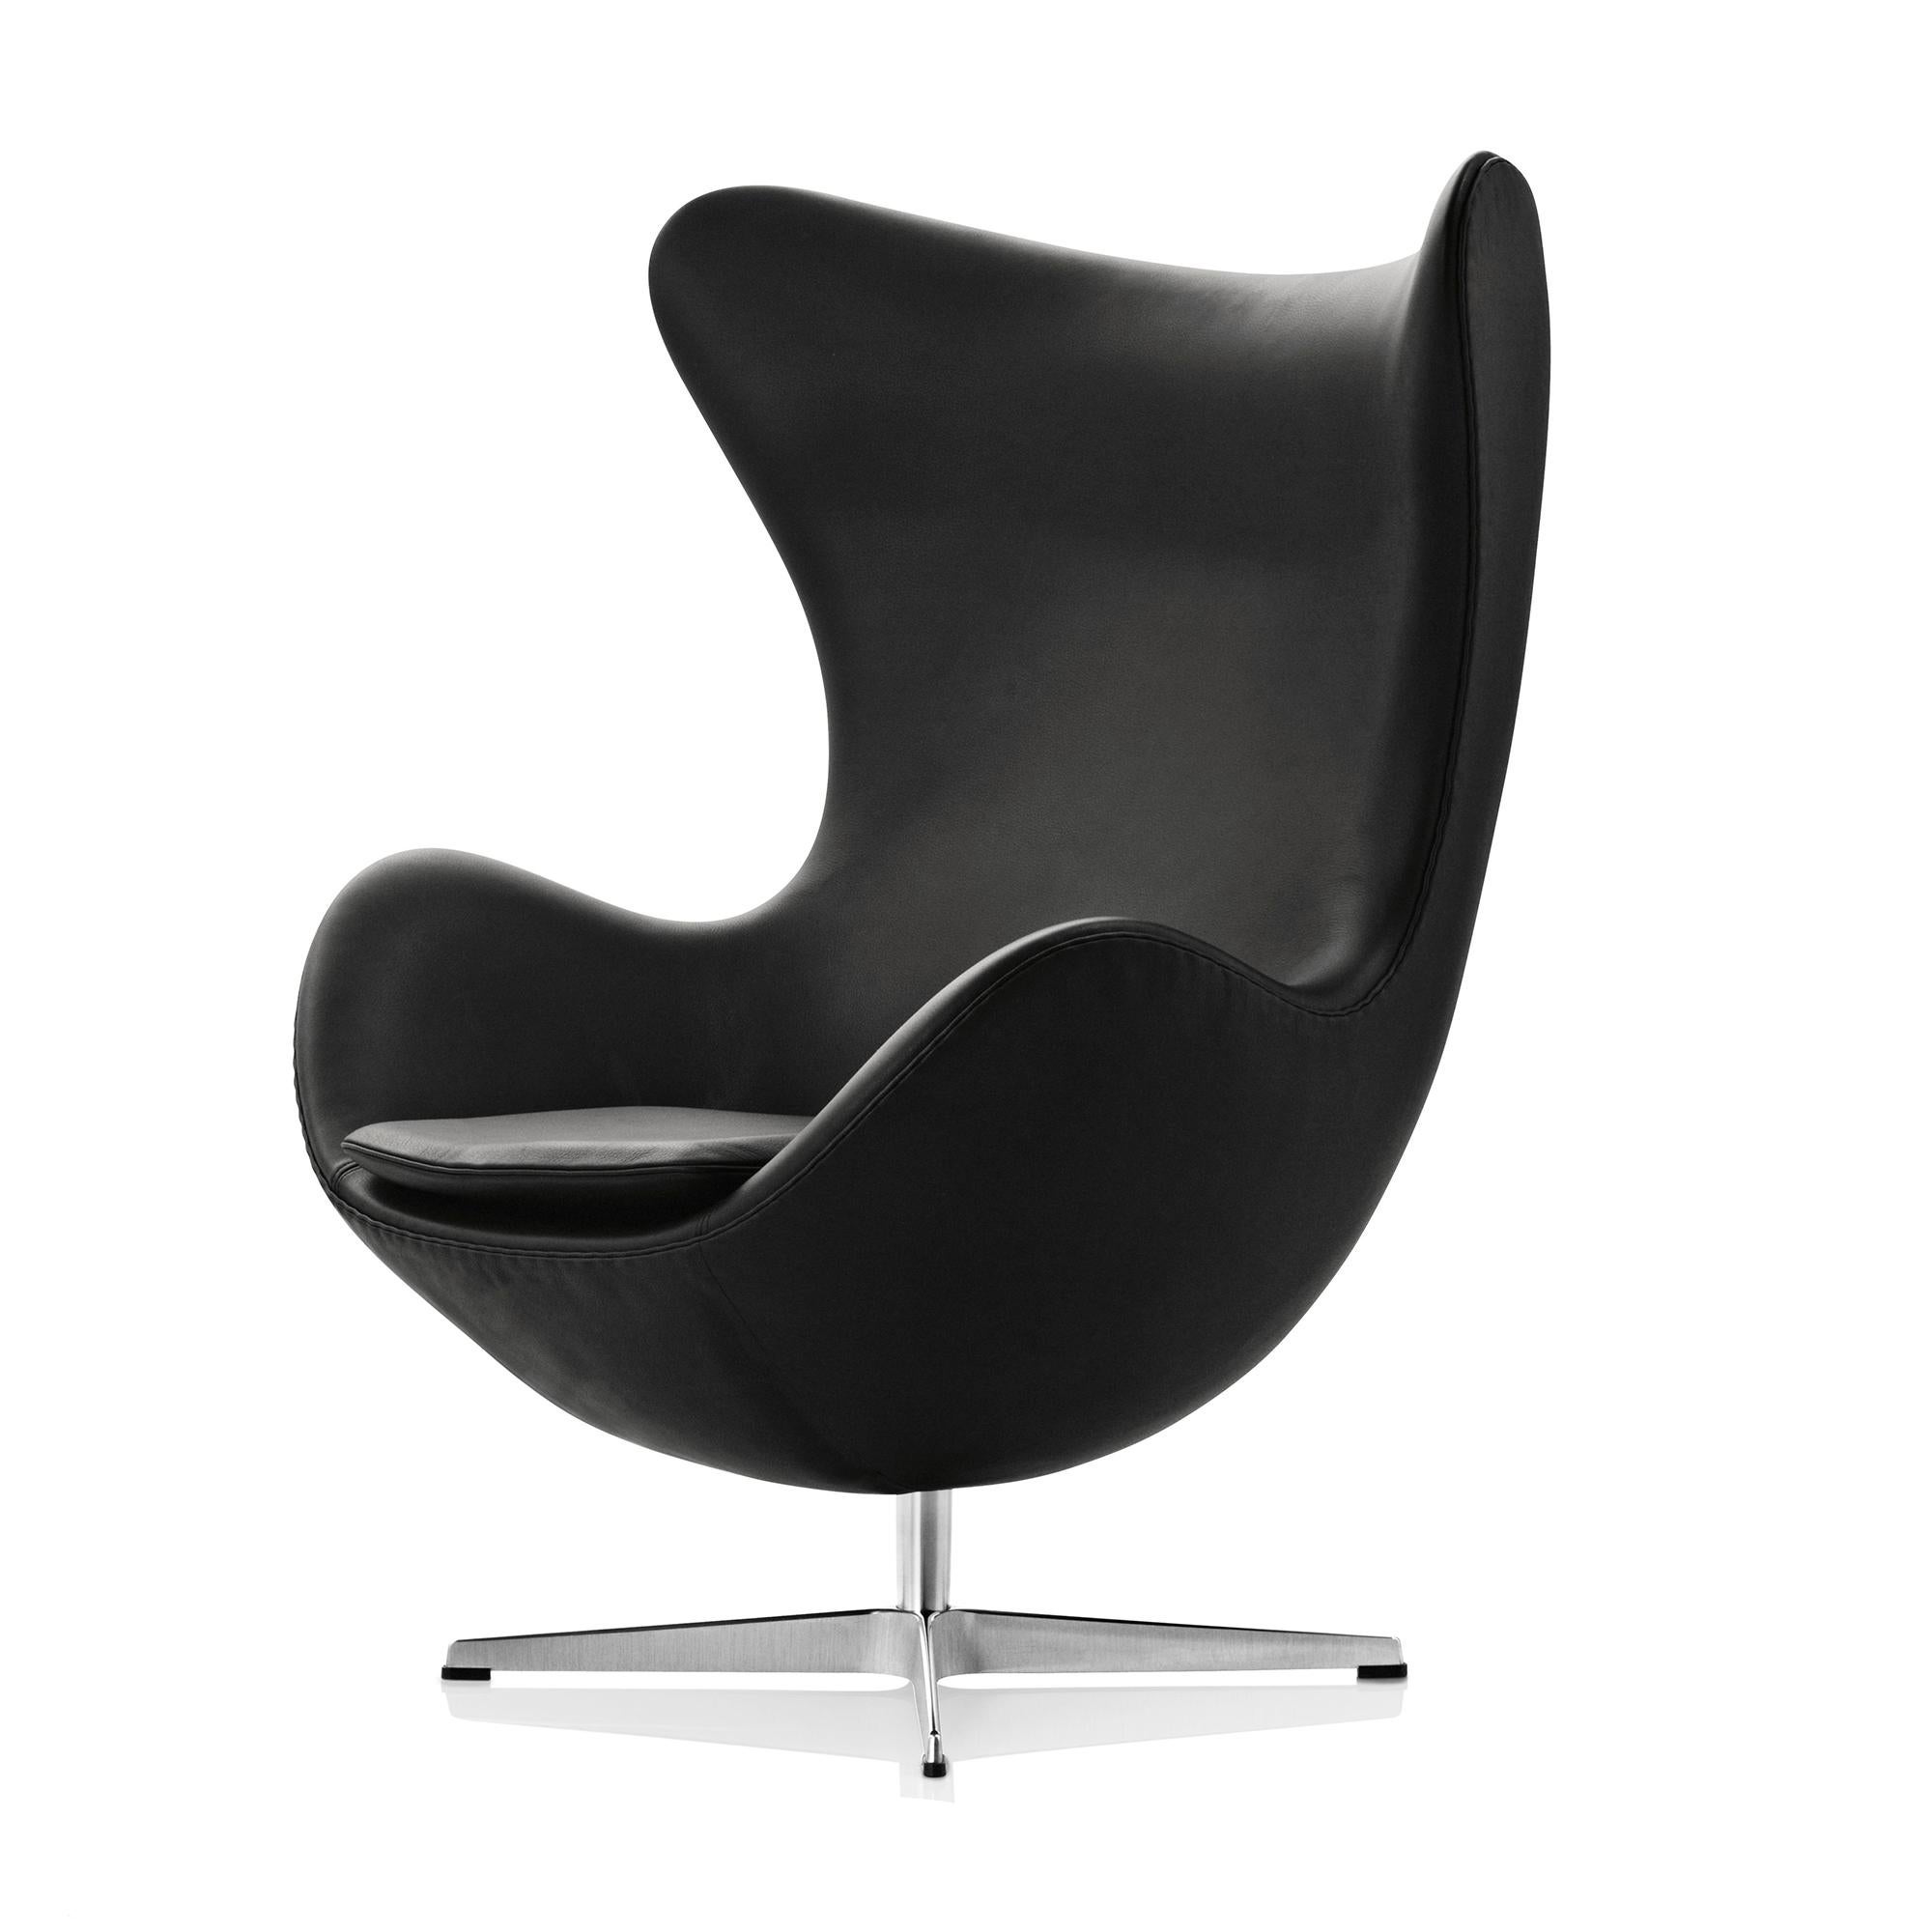 Contemporary Arne Jacobsen 'Egg' Chair for Fritz Hansen in Leather Upholstery (Cat. 4) For Sale